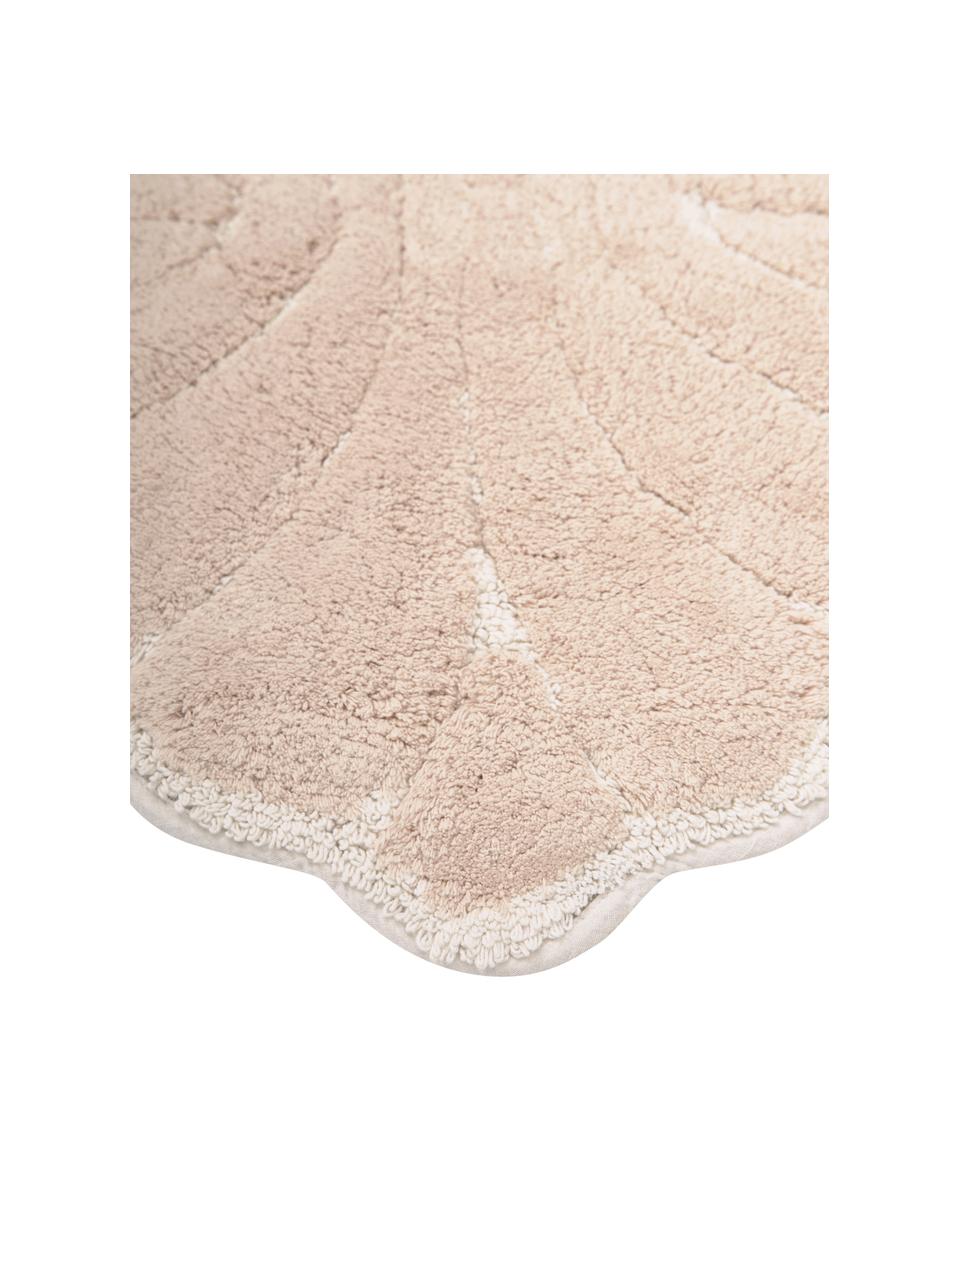 Alfombrilla de baño de algodón ecológico Soft, 100% algodón con certificado BCI, Crudo, blanco, An 70 x L 80 cm